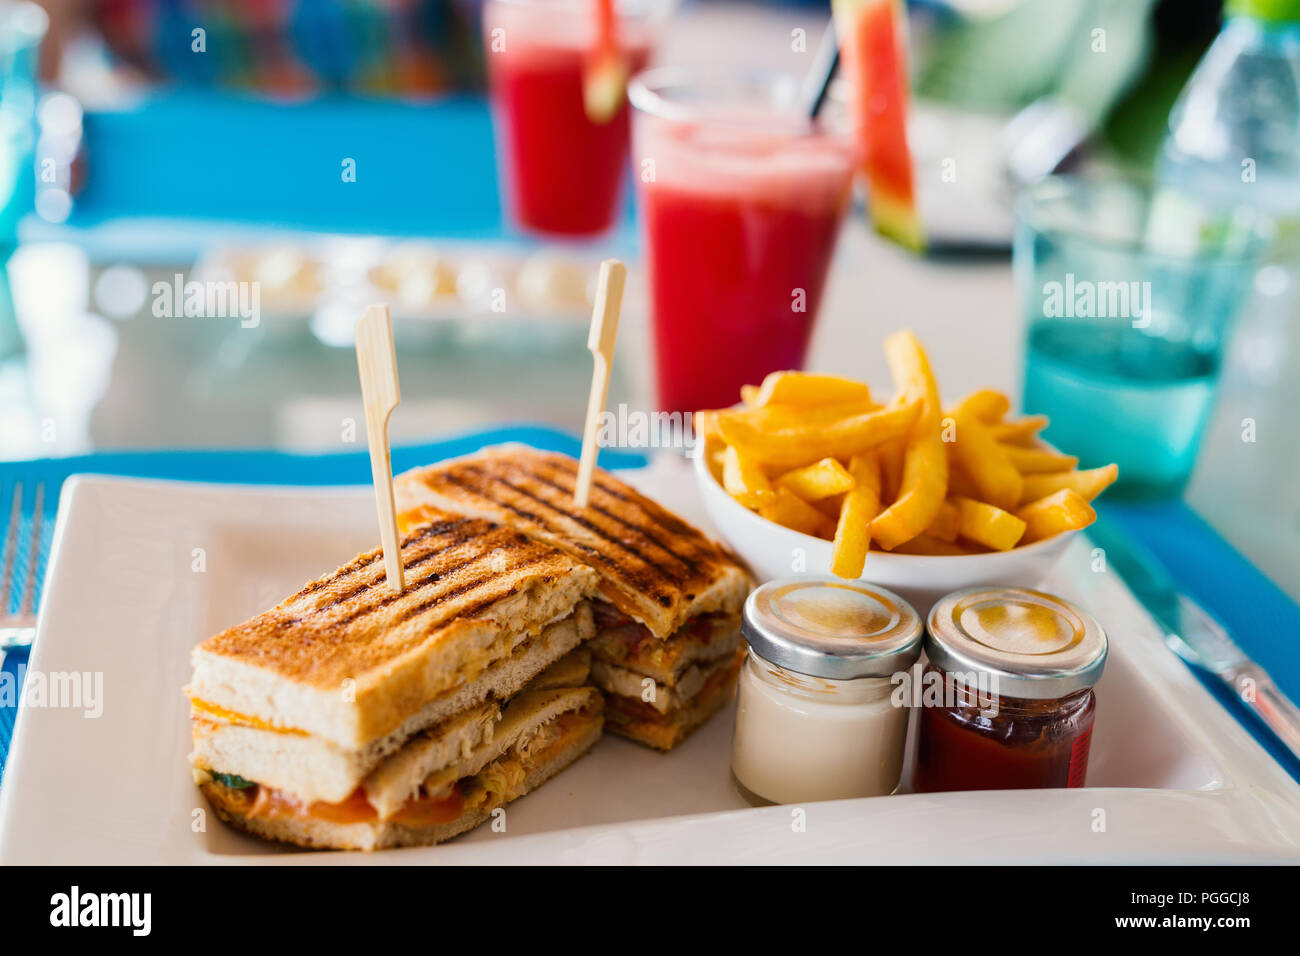 Delicioso sándwich de pollo fresco y papas fritas servidos para comer Foto de stock